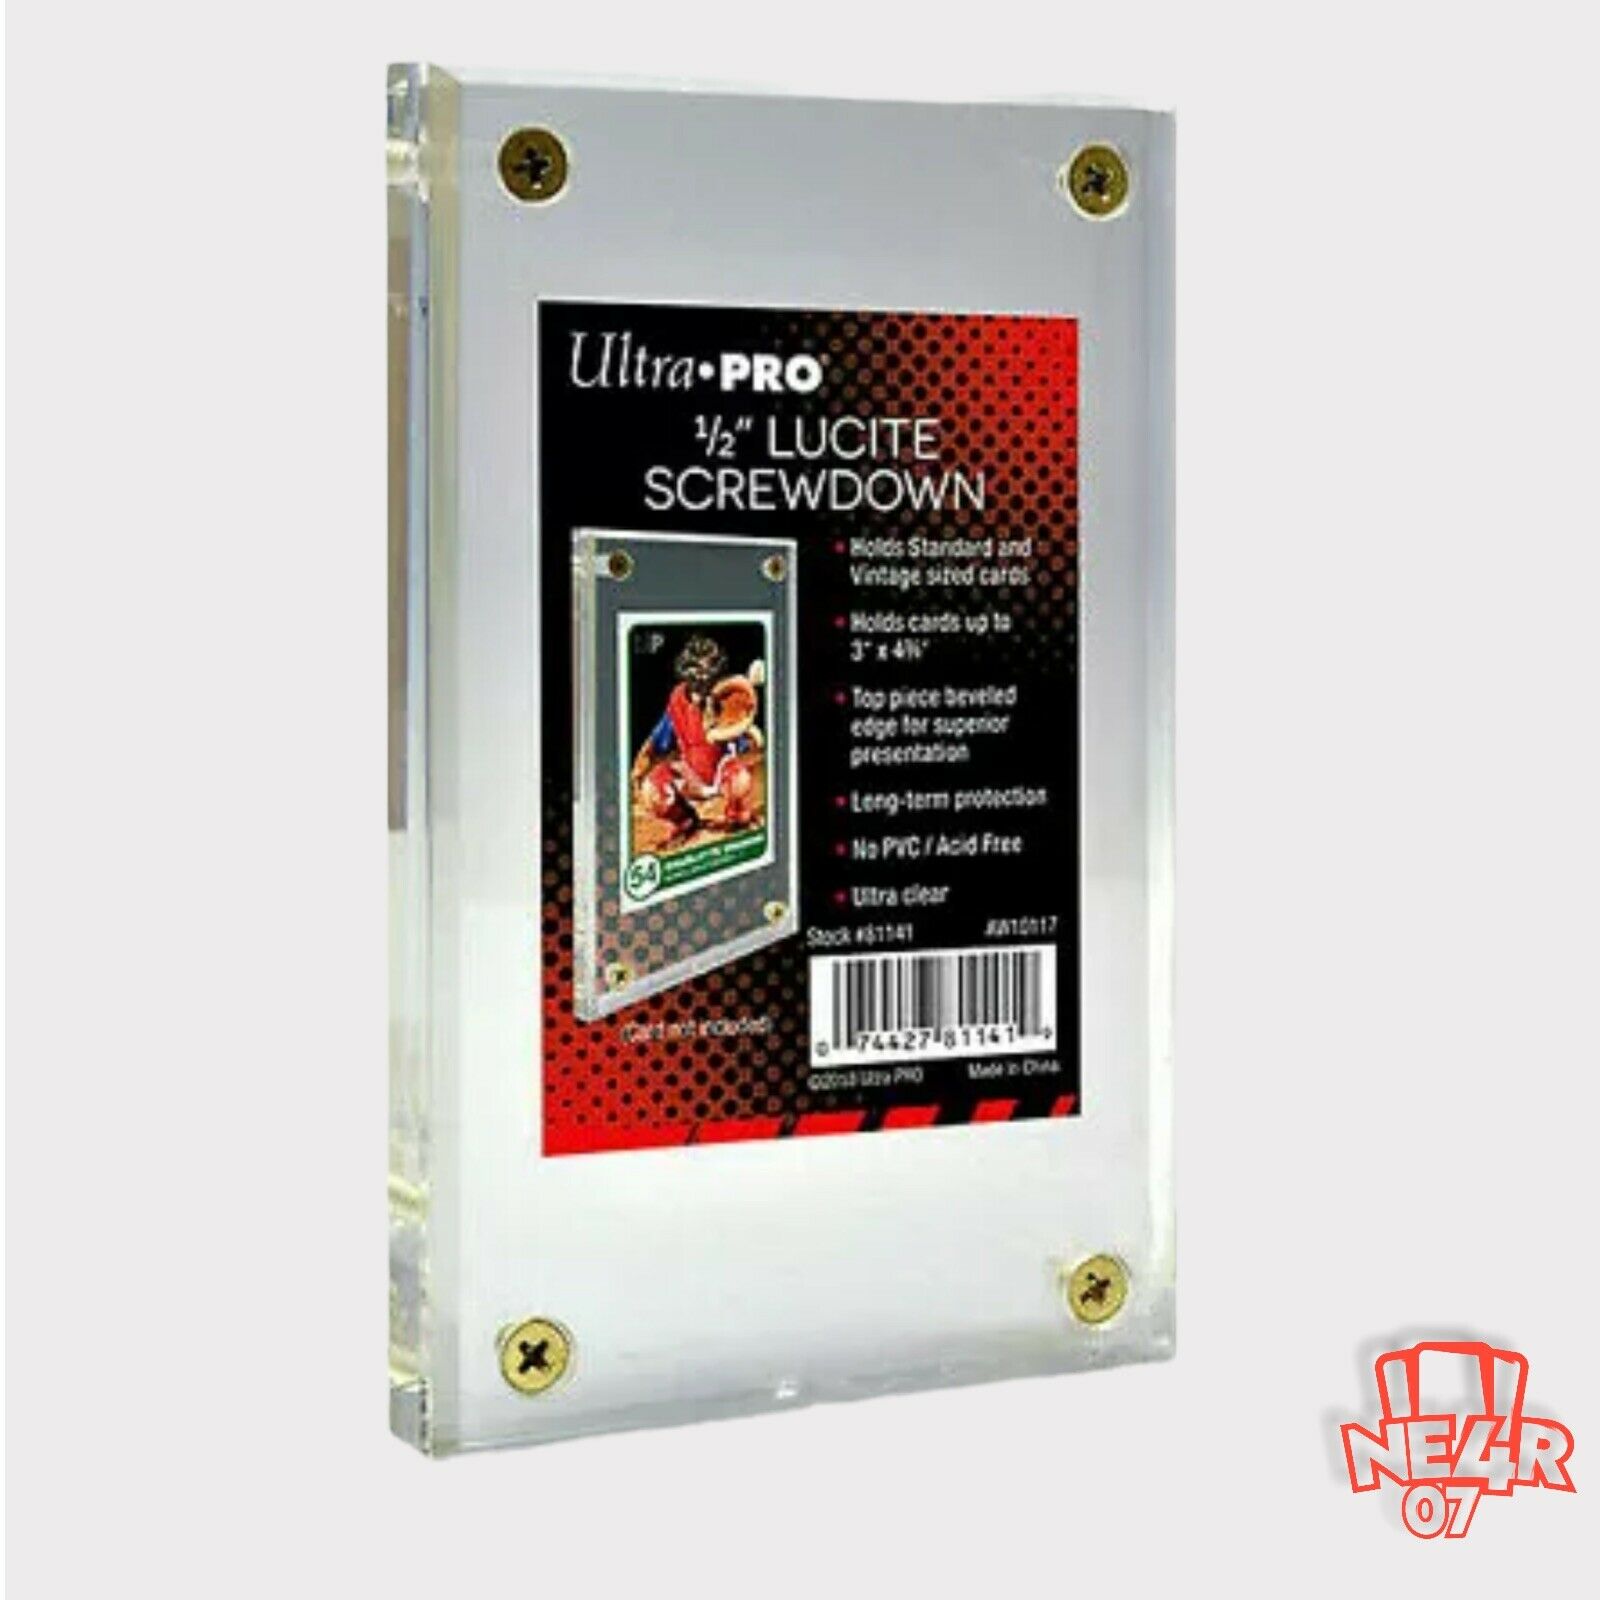 Espositore - 1/2 Lucite Screwdown - Ultra Pro - Near07 Store